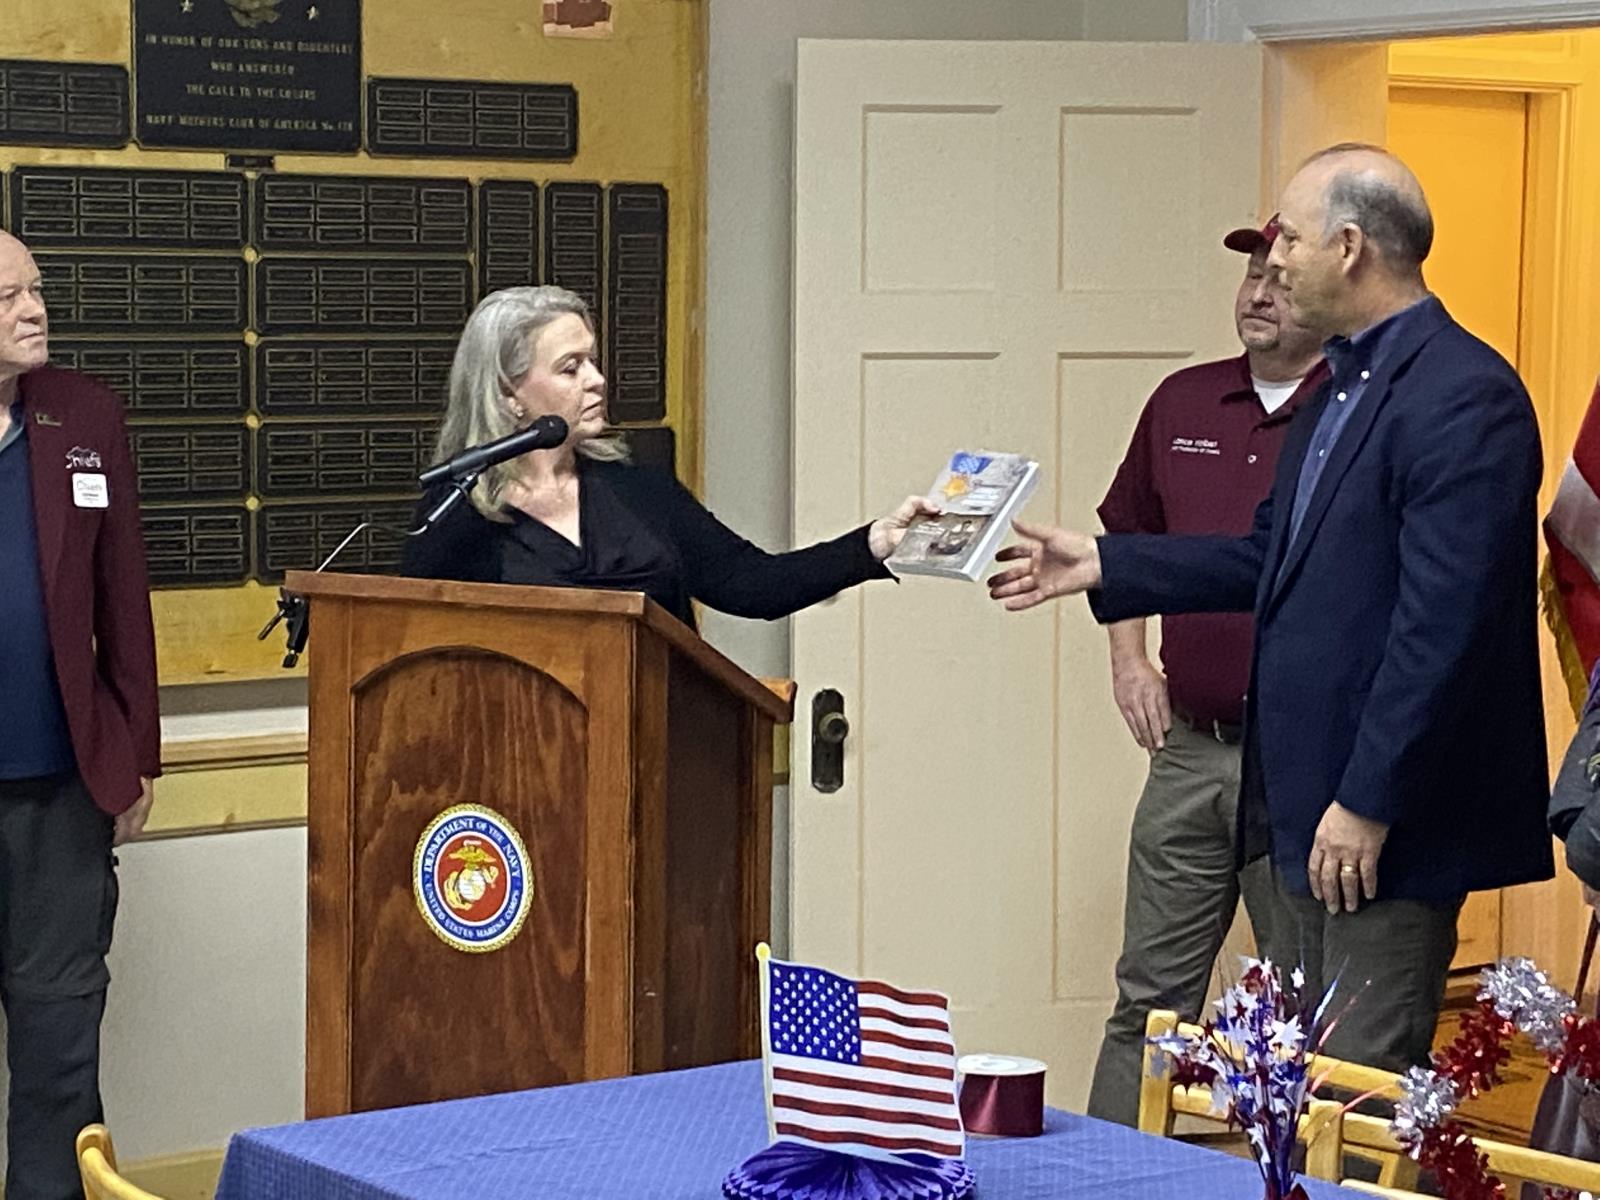 Farm Bureau Mutual Insurance Co. of Idaho CEO Todd Argall is presented a book about Pocatello Medal of Honor recipient James E. Johnson Nov. 11 during a Veterans Day celebration at the Bannock County Veterans Memorial Building.  